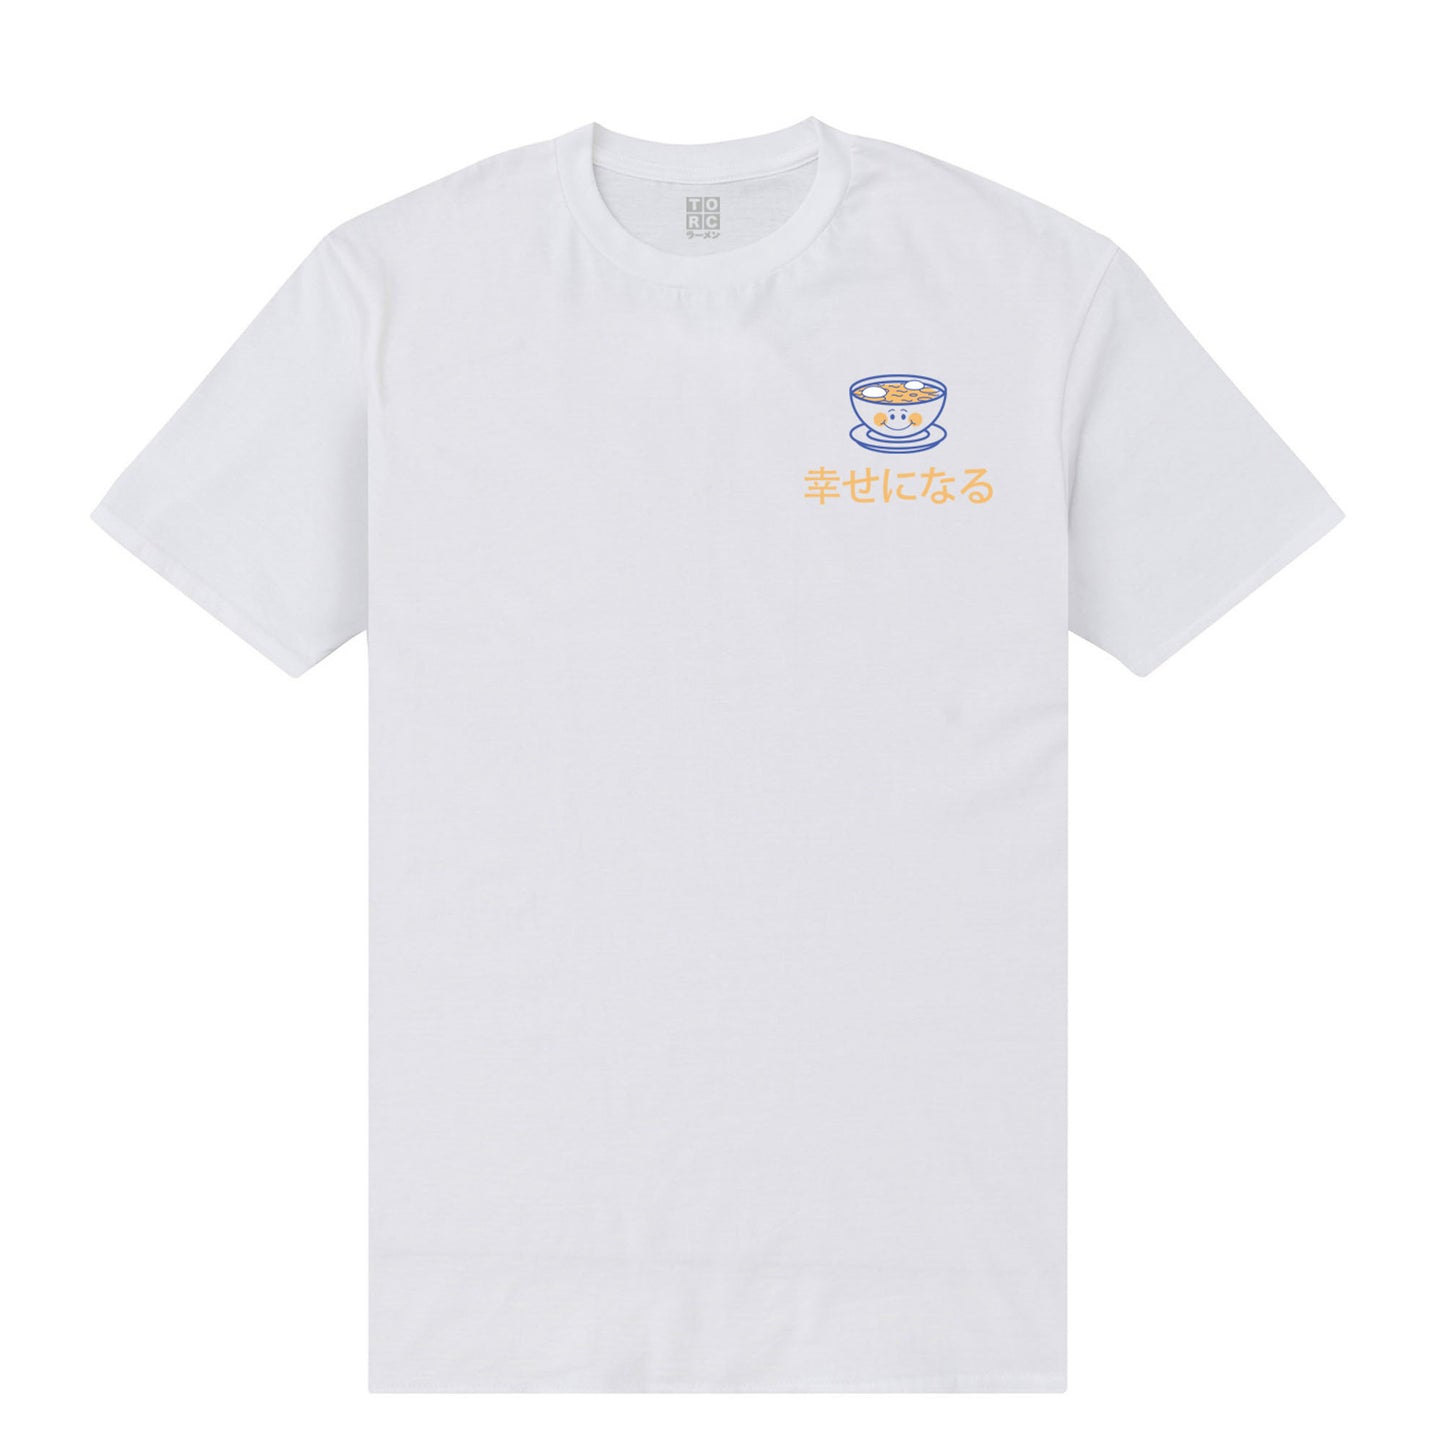 TORC Self Service T-Shirt